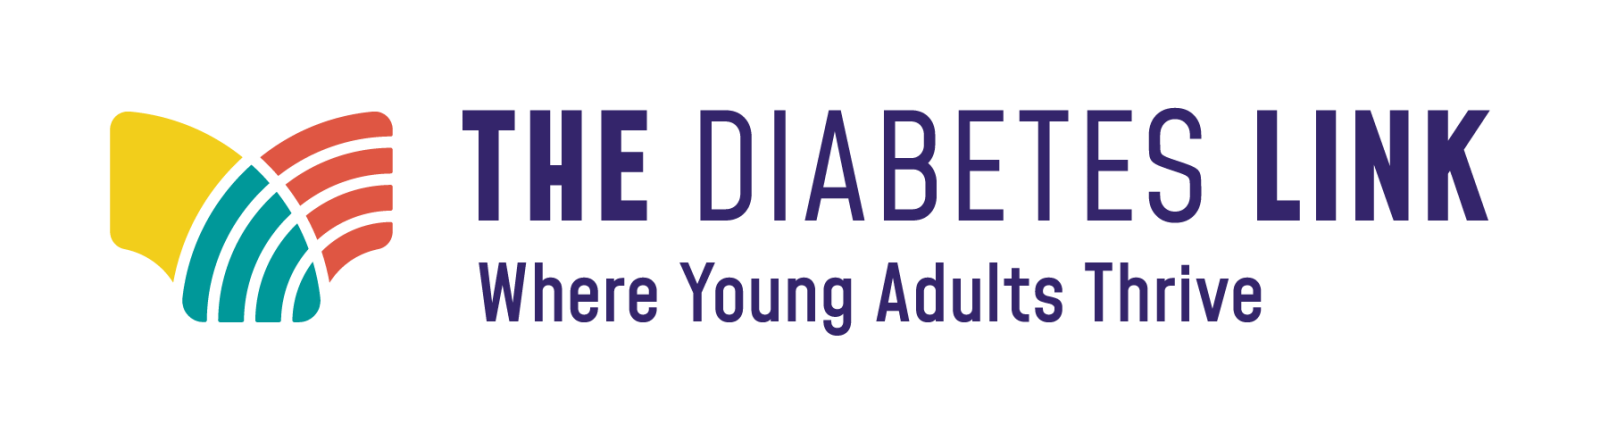 The Diabetes Link logo